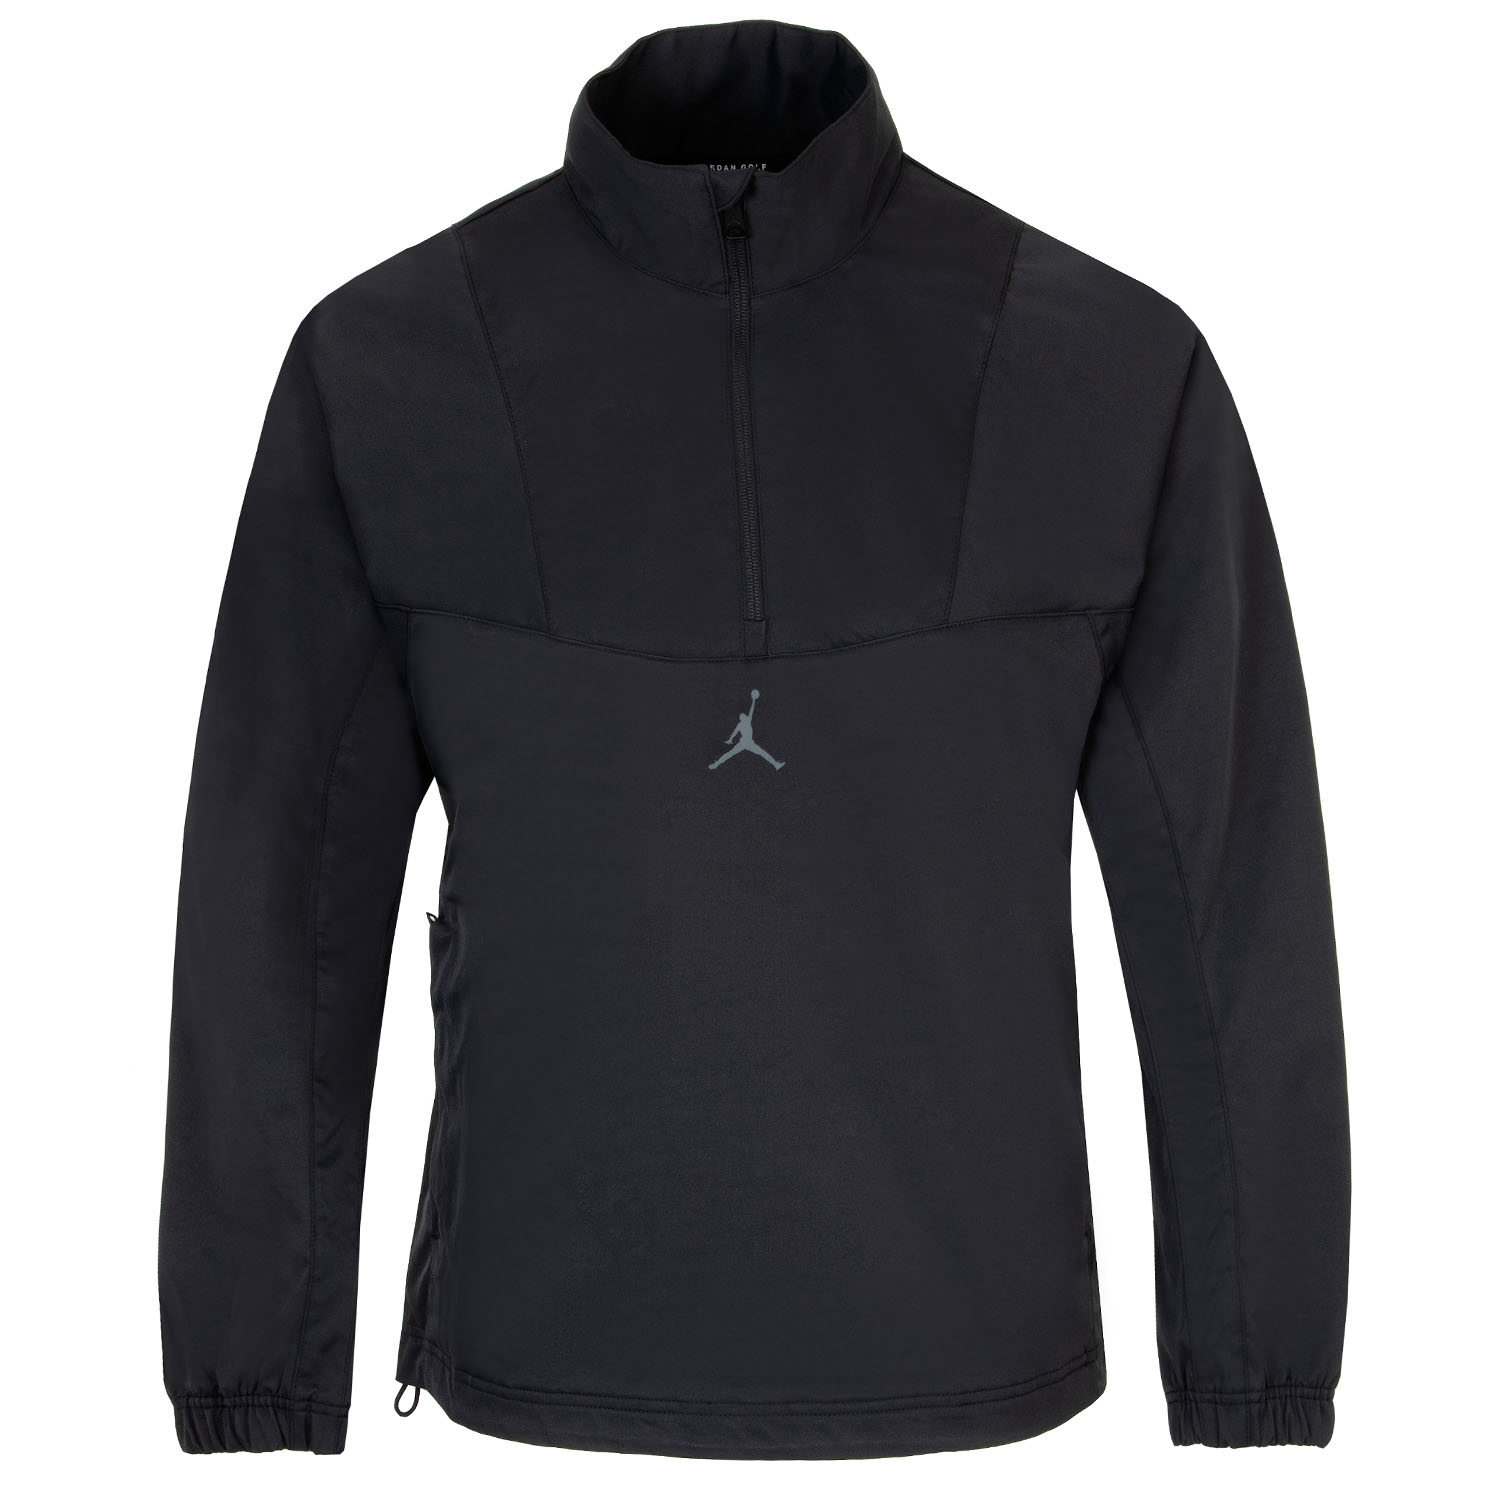 Nike Jordan Sport Sustainable Materials Zip Neck Golf Sweater